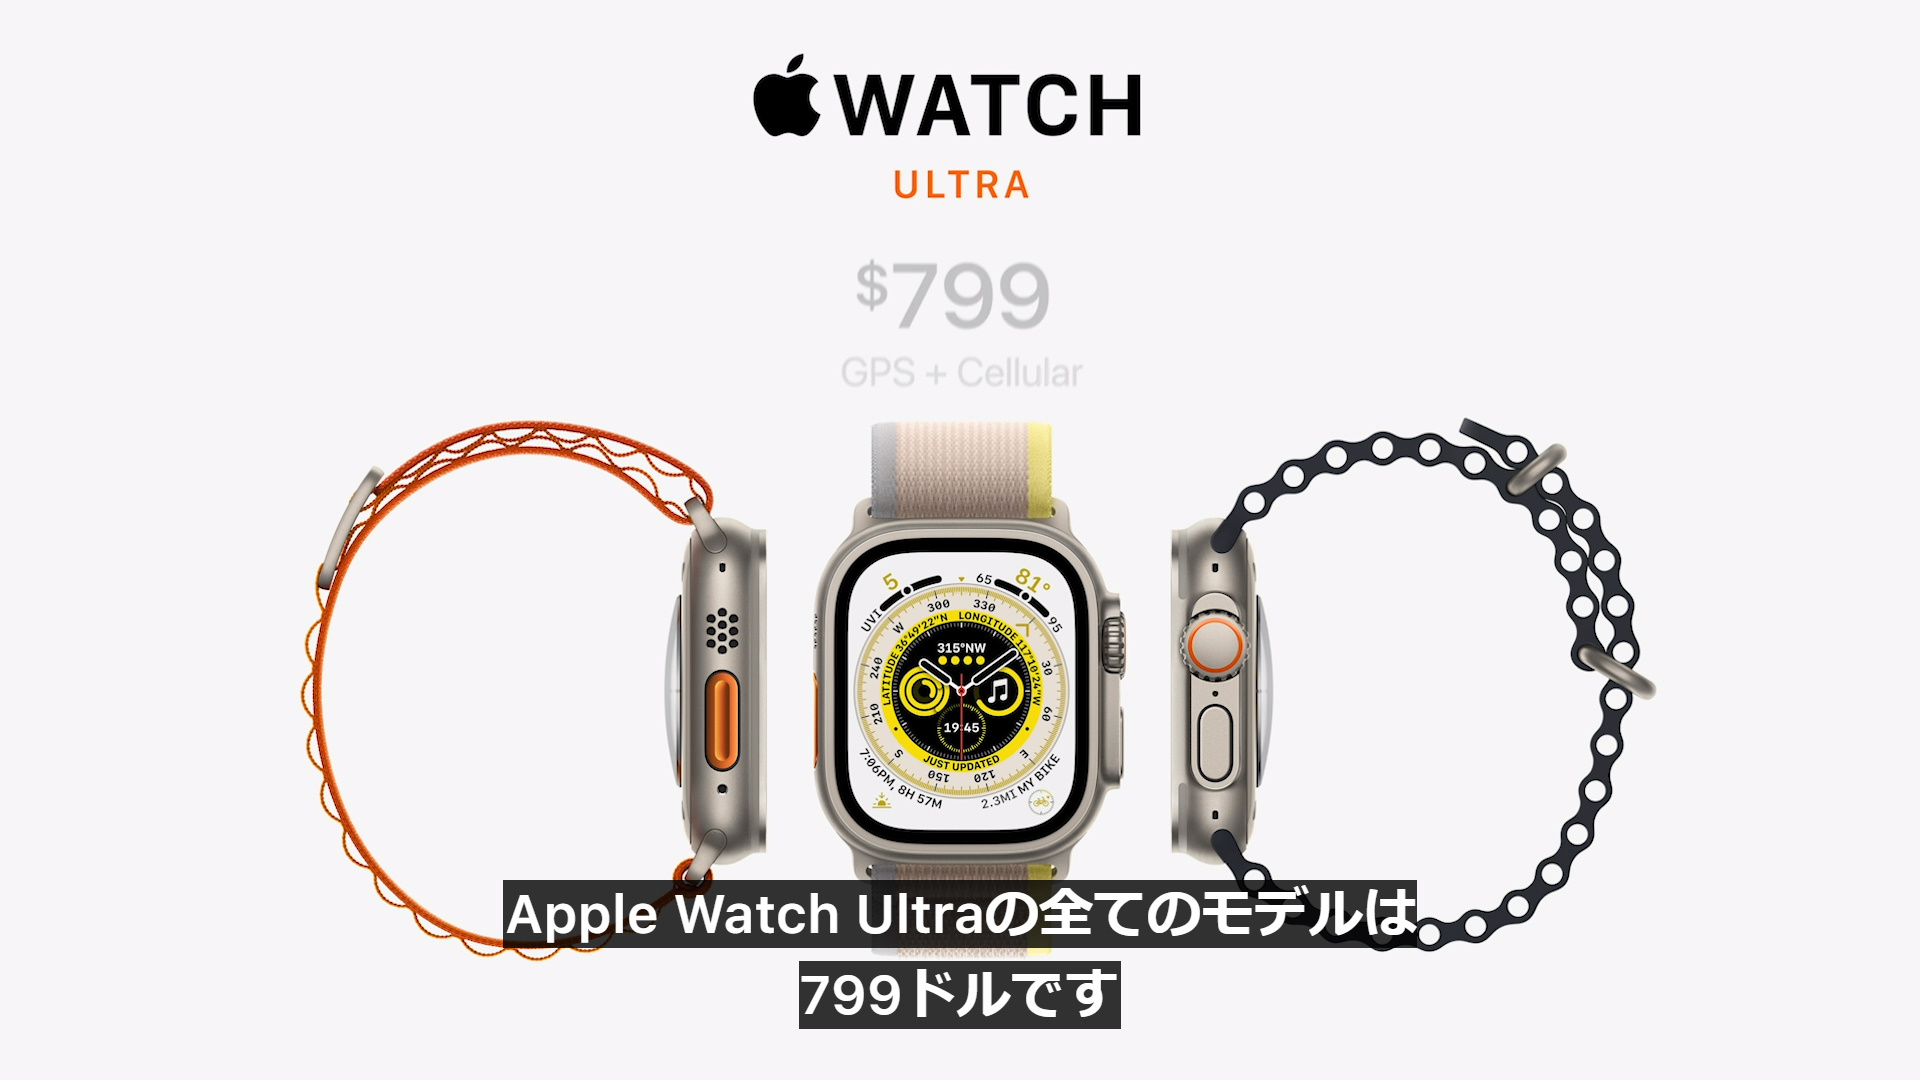 Apple Watch Ultra」、価格は799ドル。9月23日より発売【Apple Event